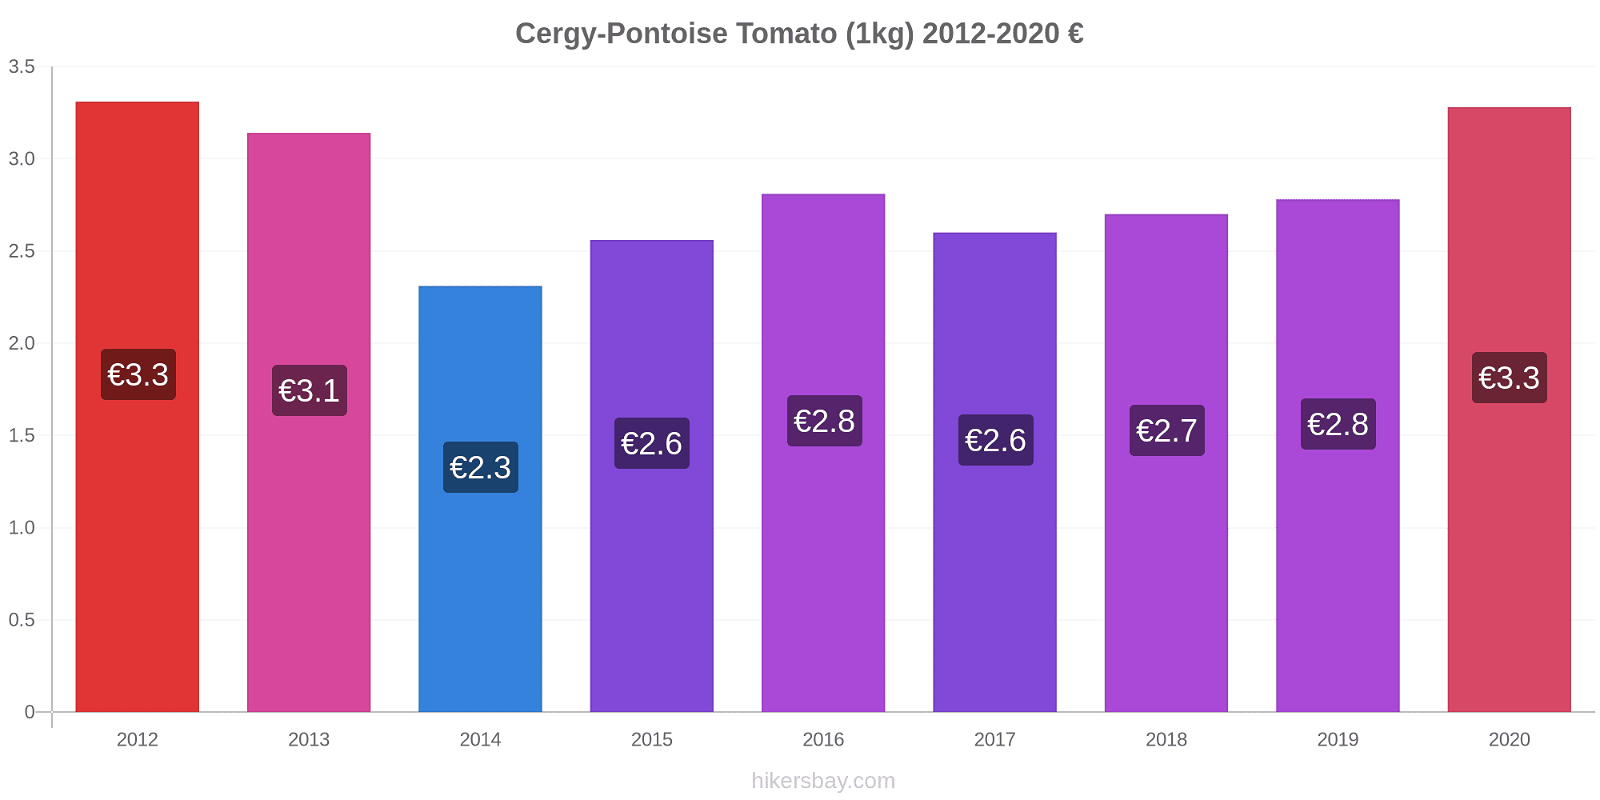 Cergy-Pontoise price changes Tomato (1kg) hikersbay.com